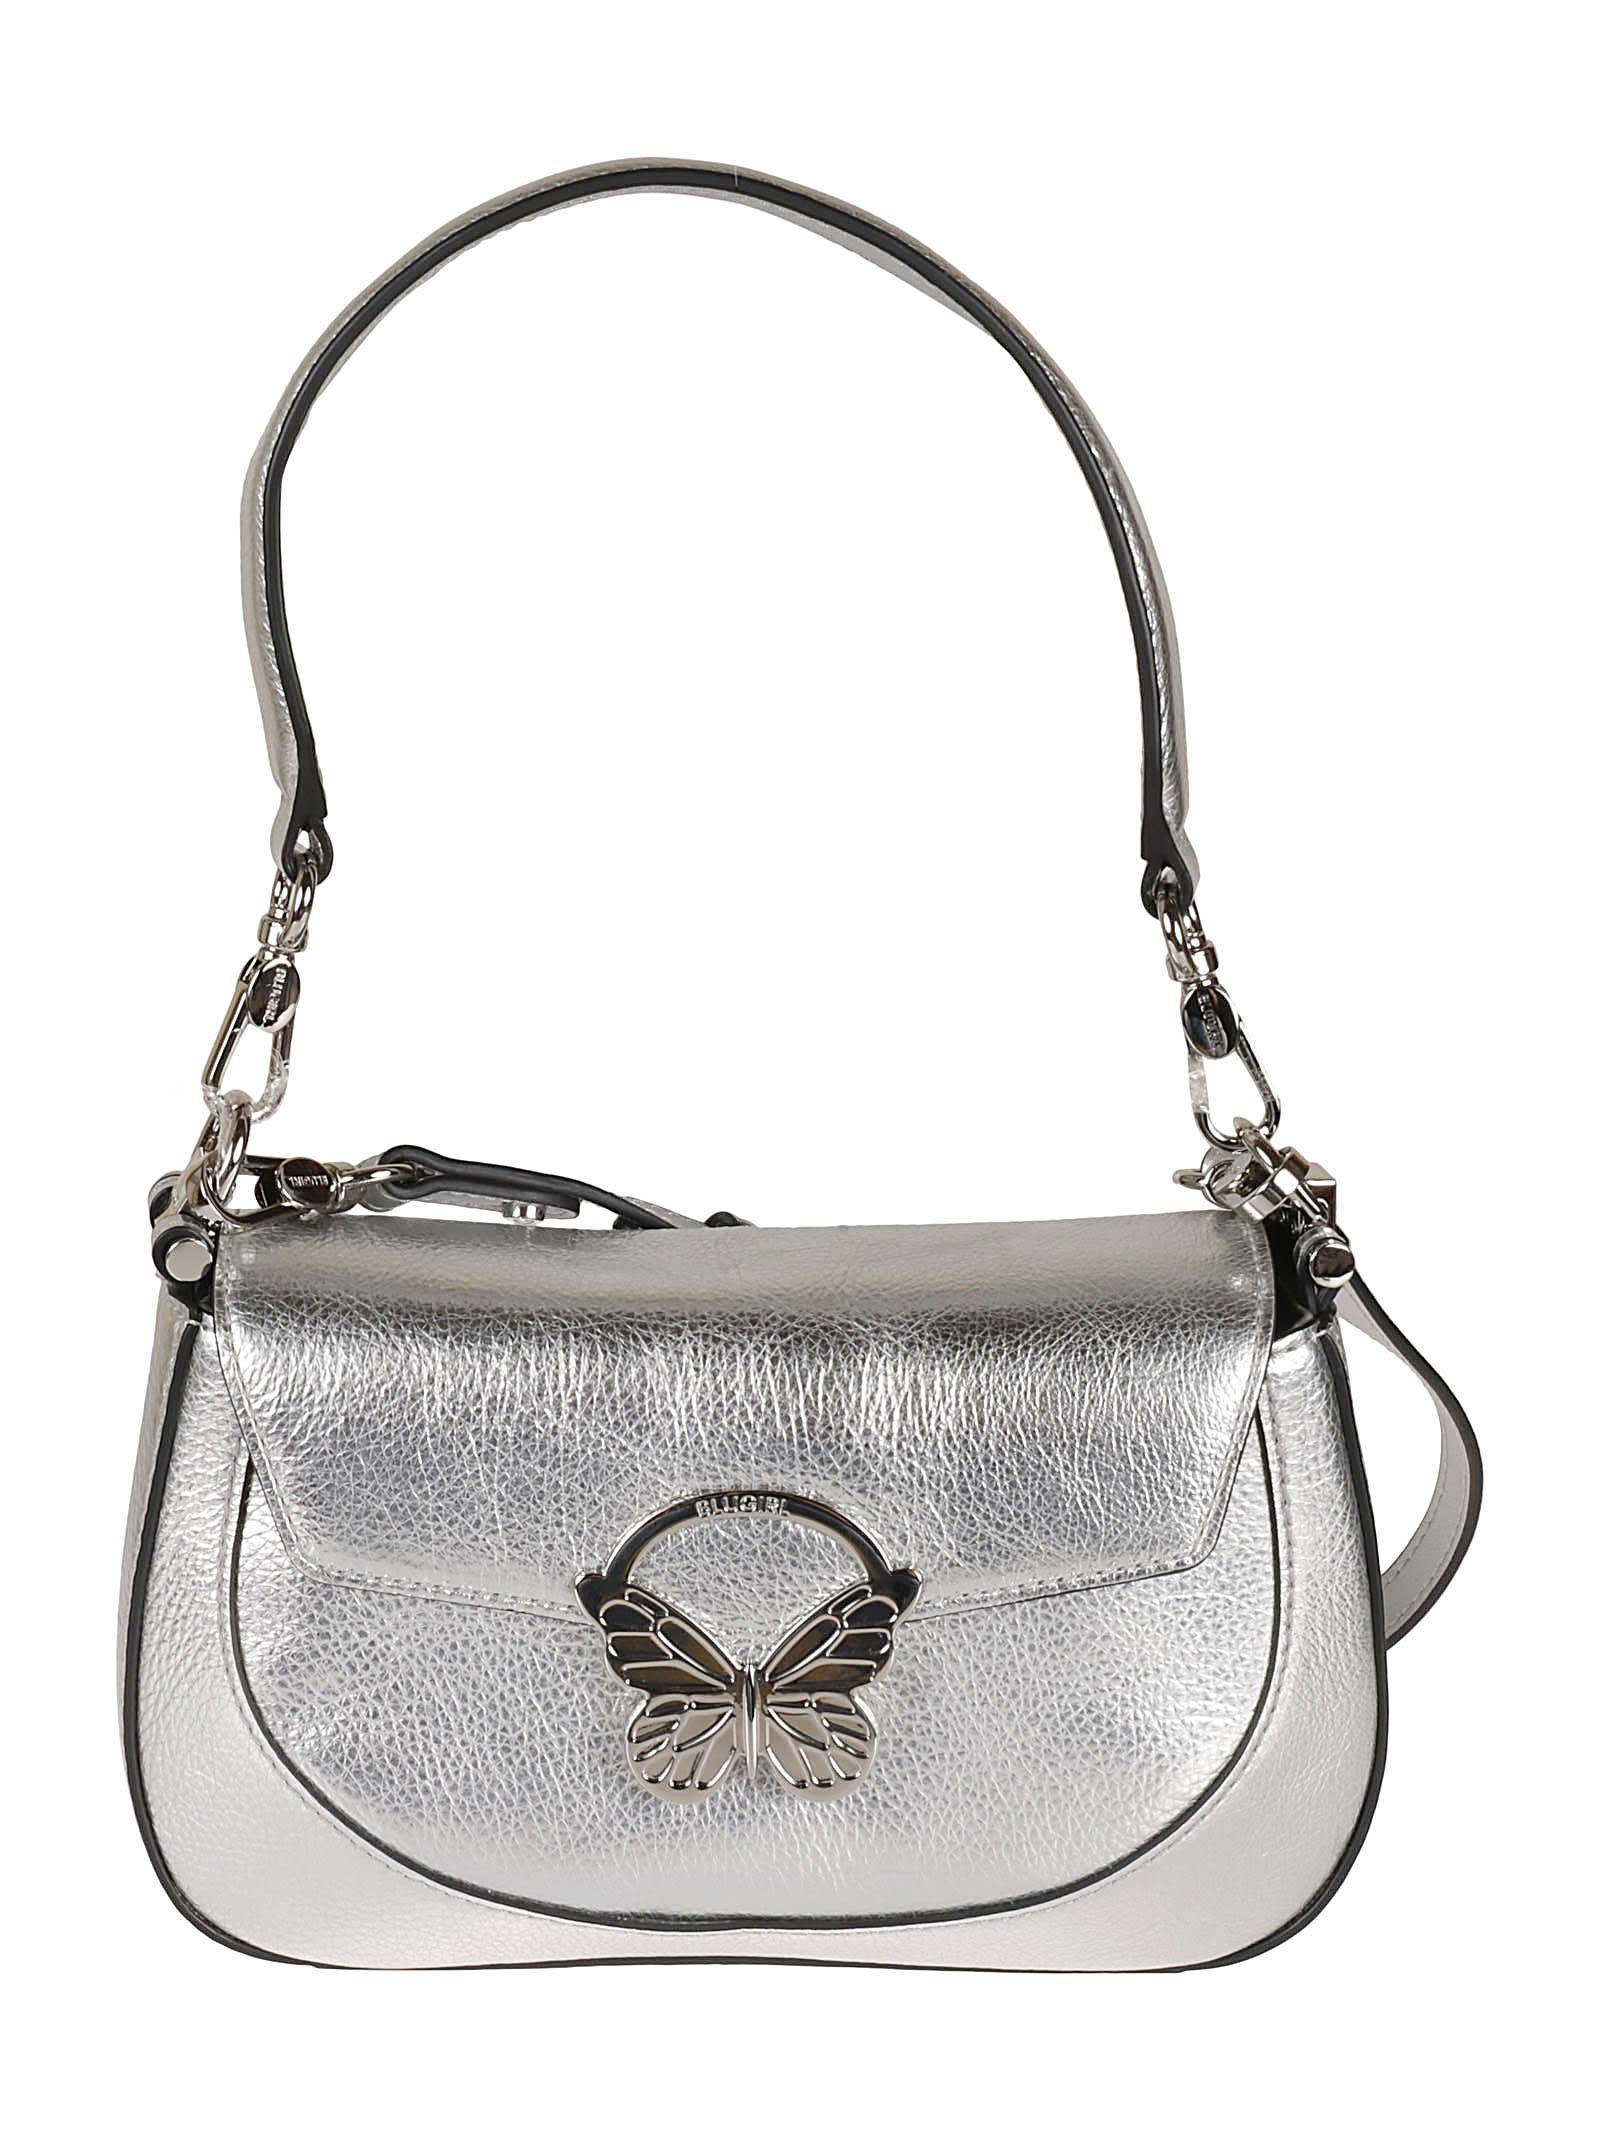 Blugirl Blumarine Butterfly Plaque Flap Metallic Shoulder Bag in Gray | Lyst